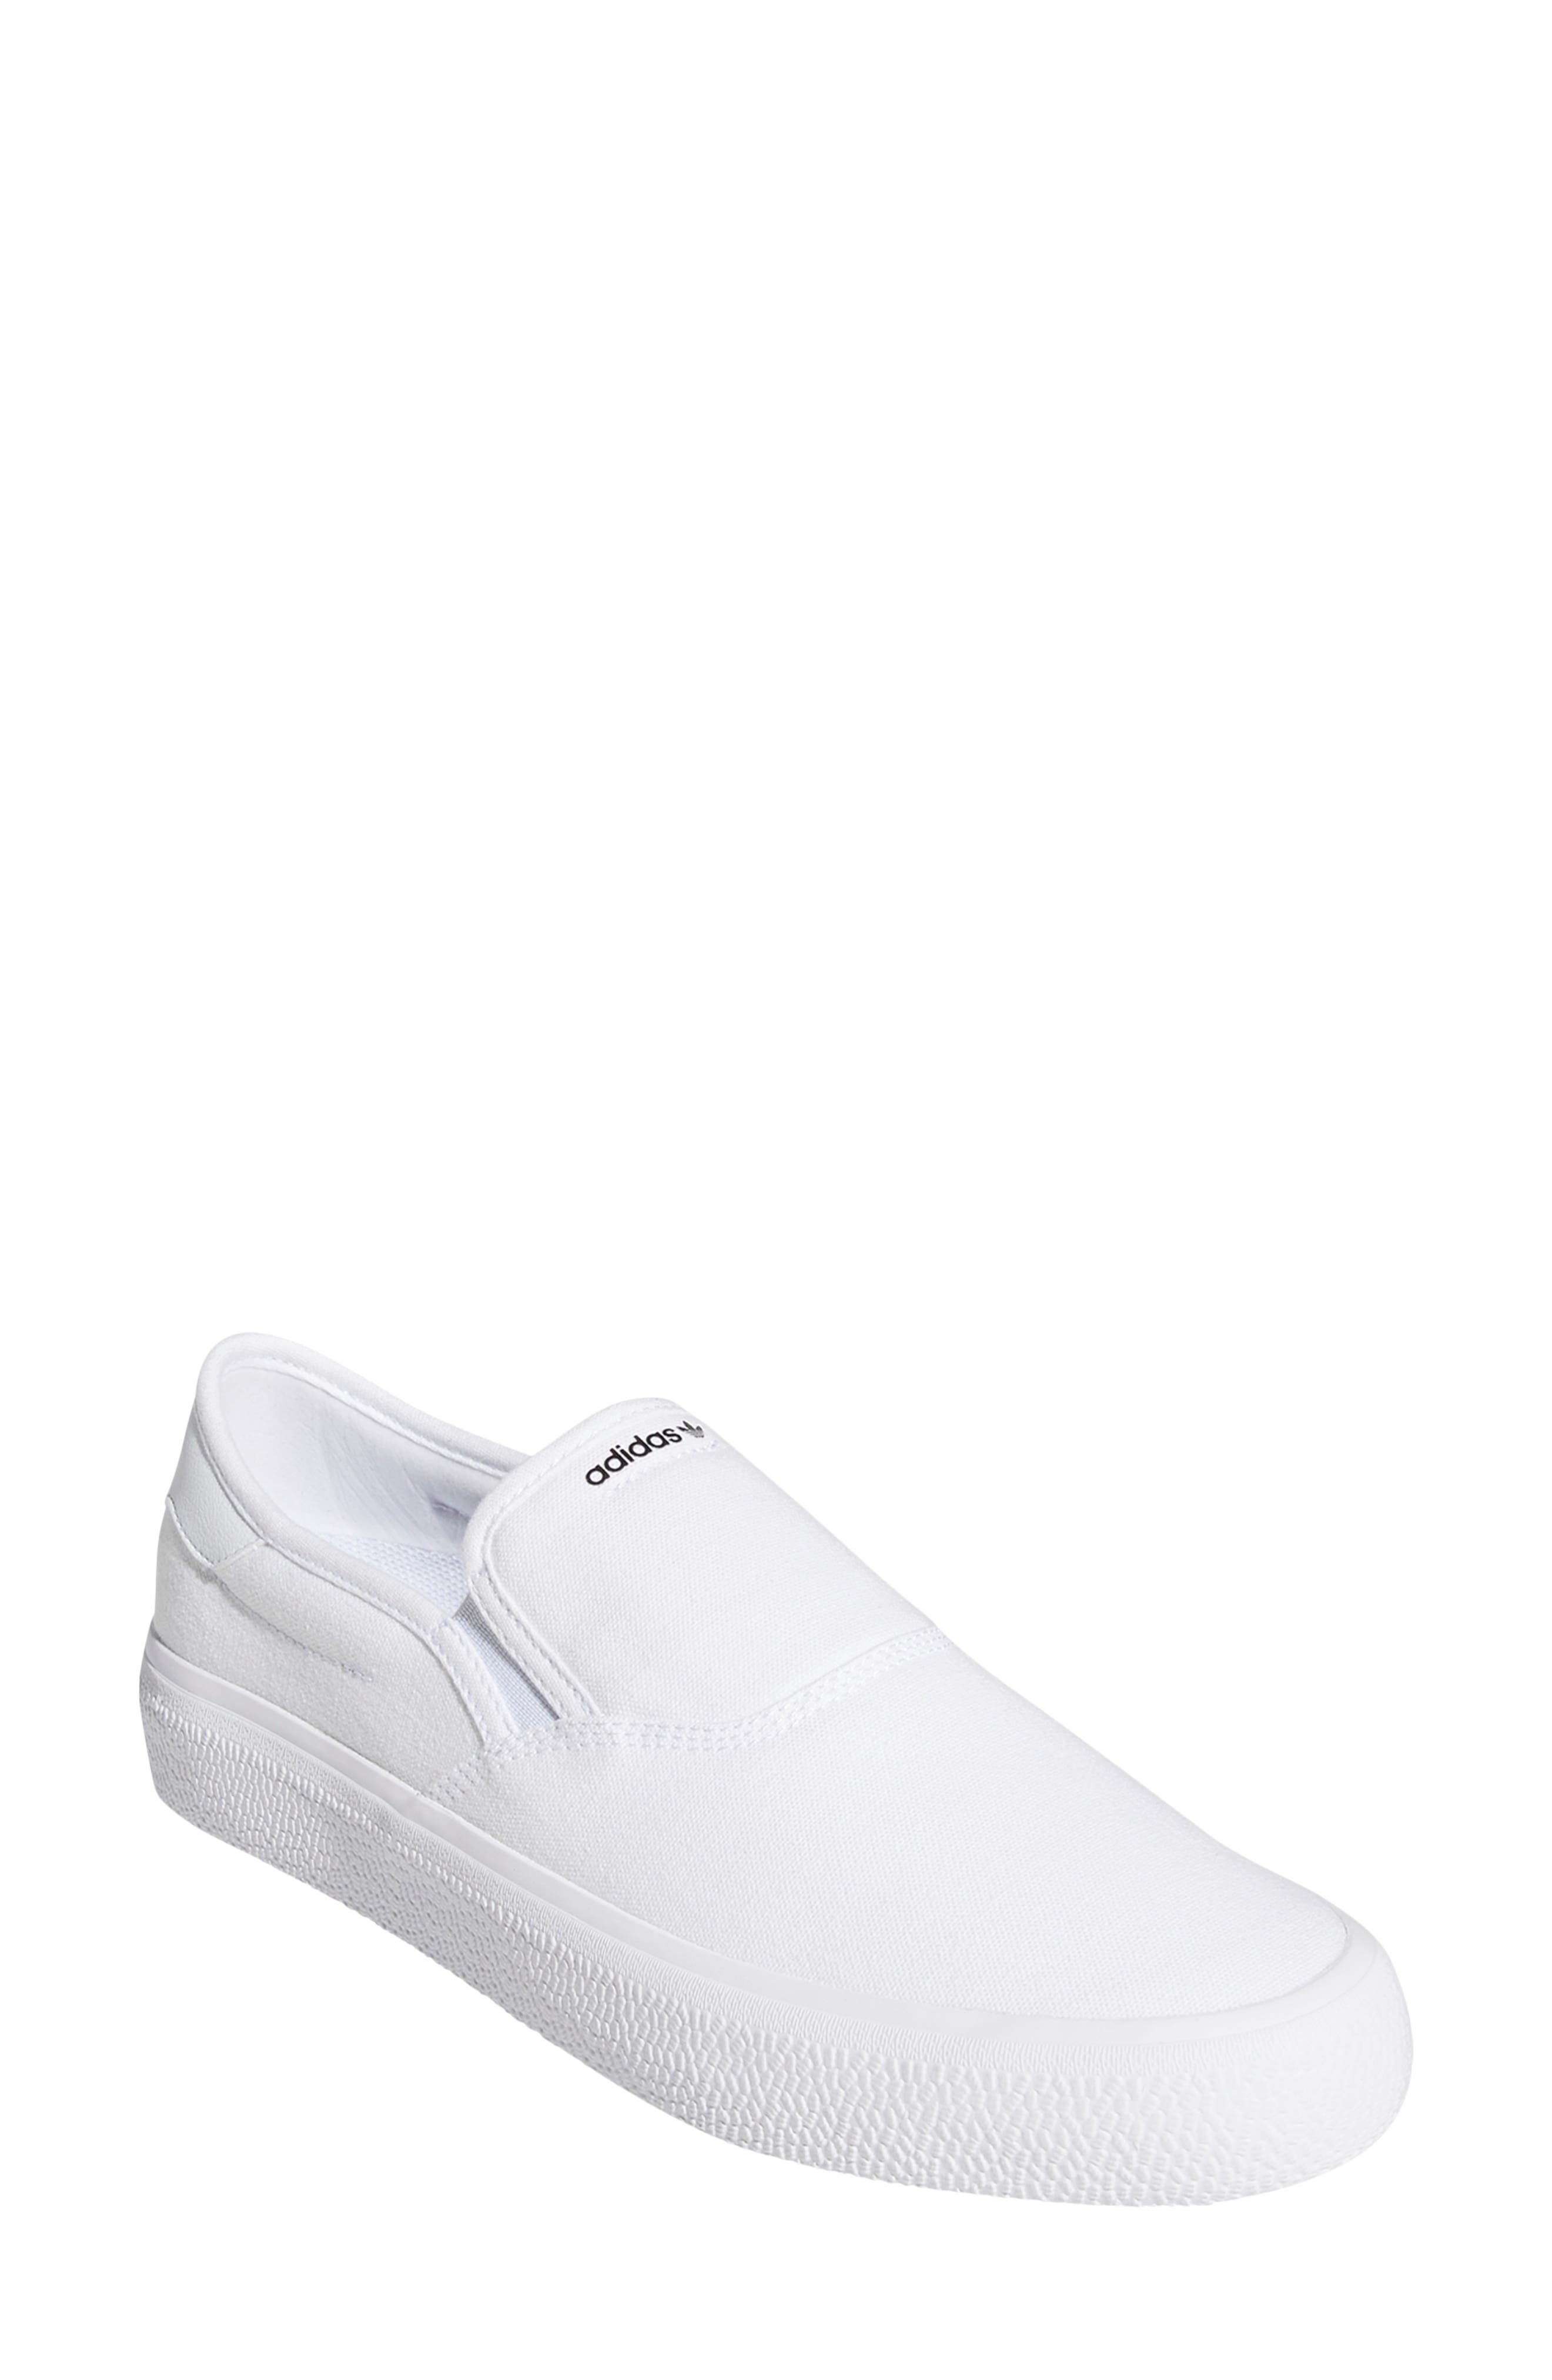 white shoes adidas price